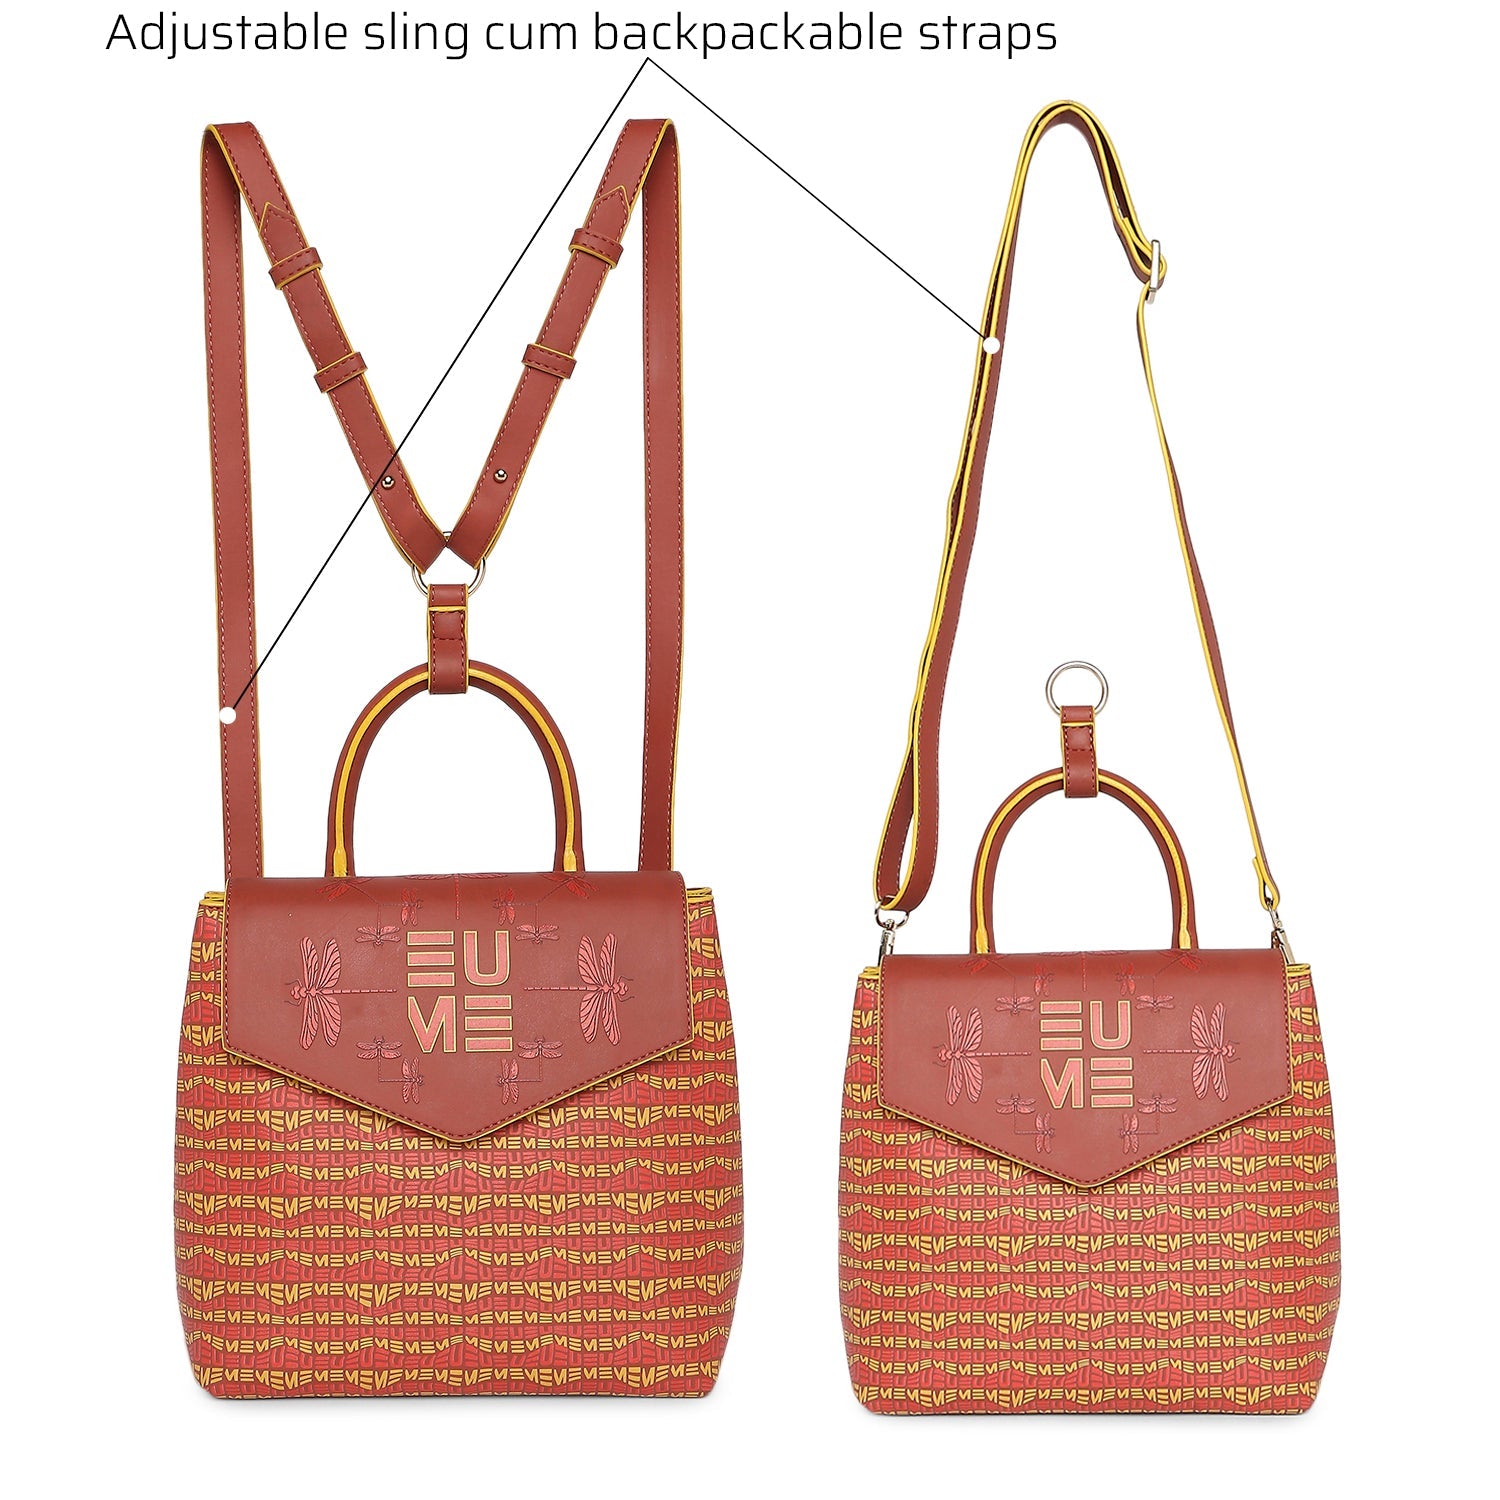 EUME Petal-tail Sling Handbag/Backpack